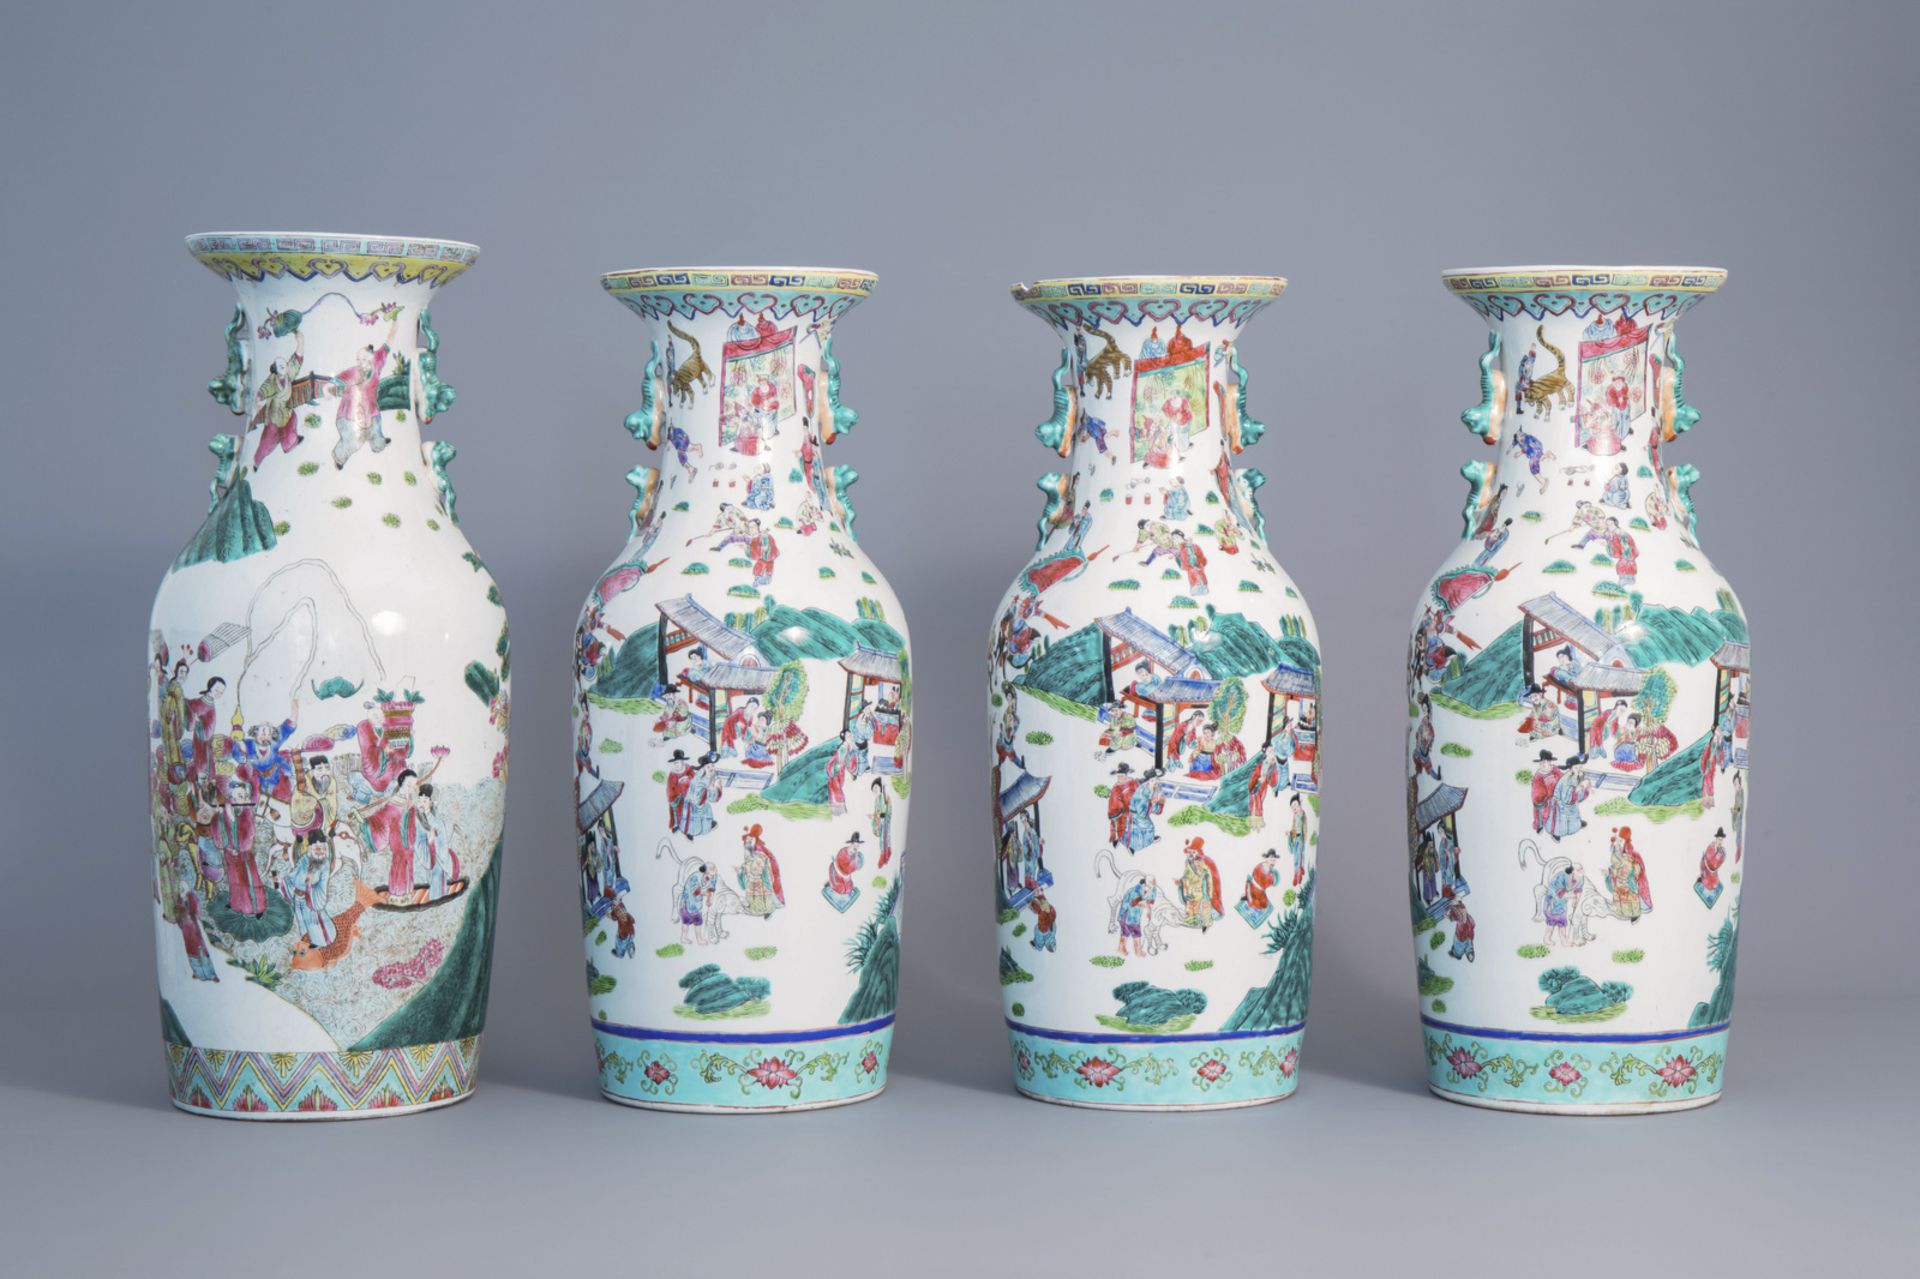 Four Chinese famille rose vases with figurative design all around, 20th C. - Bild 3 aus 6